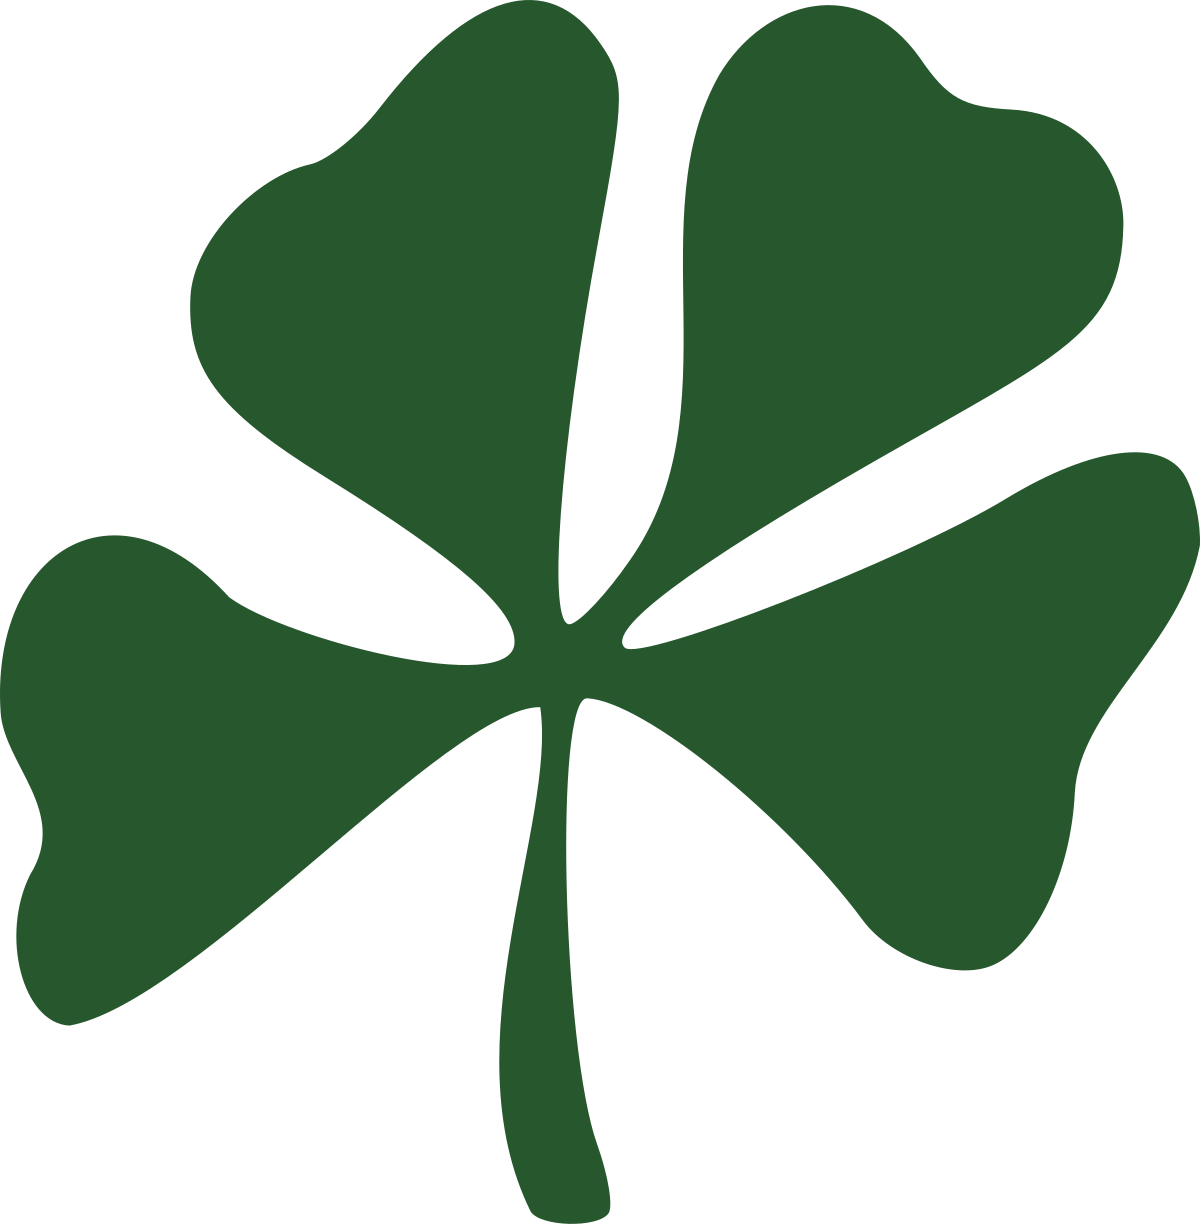 Four-leaf clover - Wikipedia